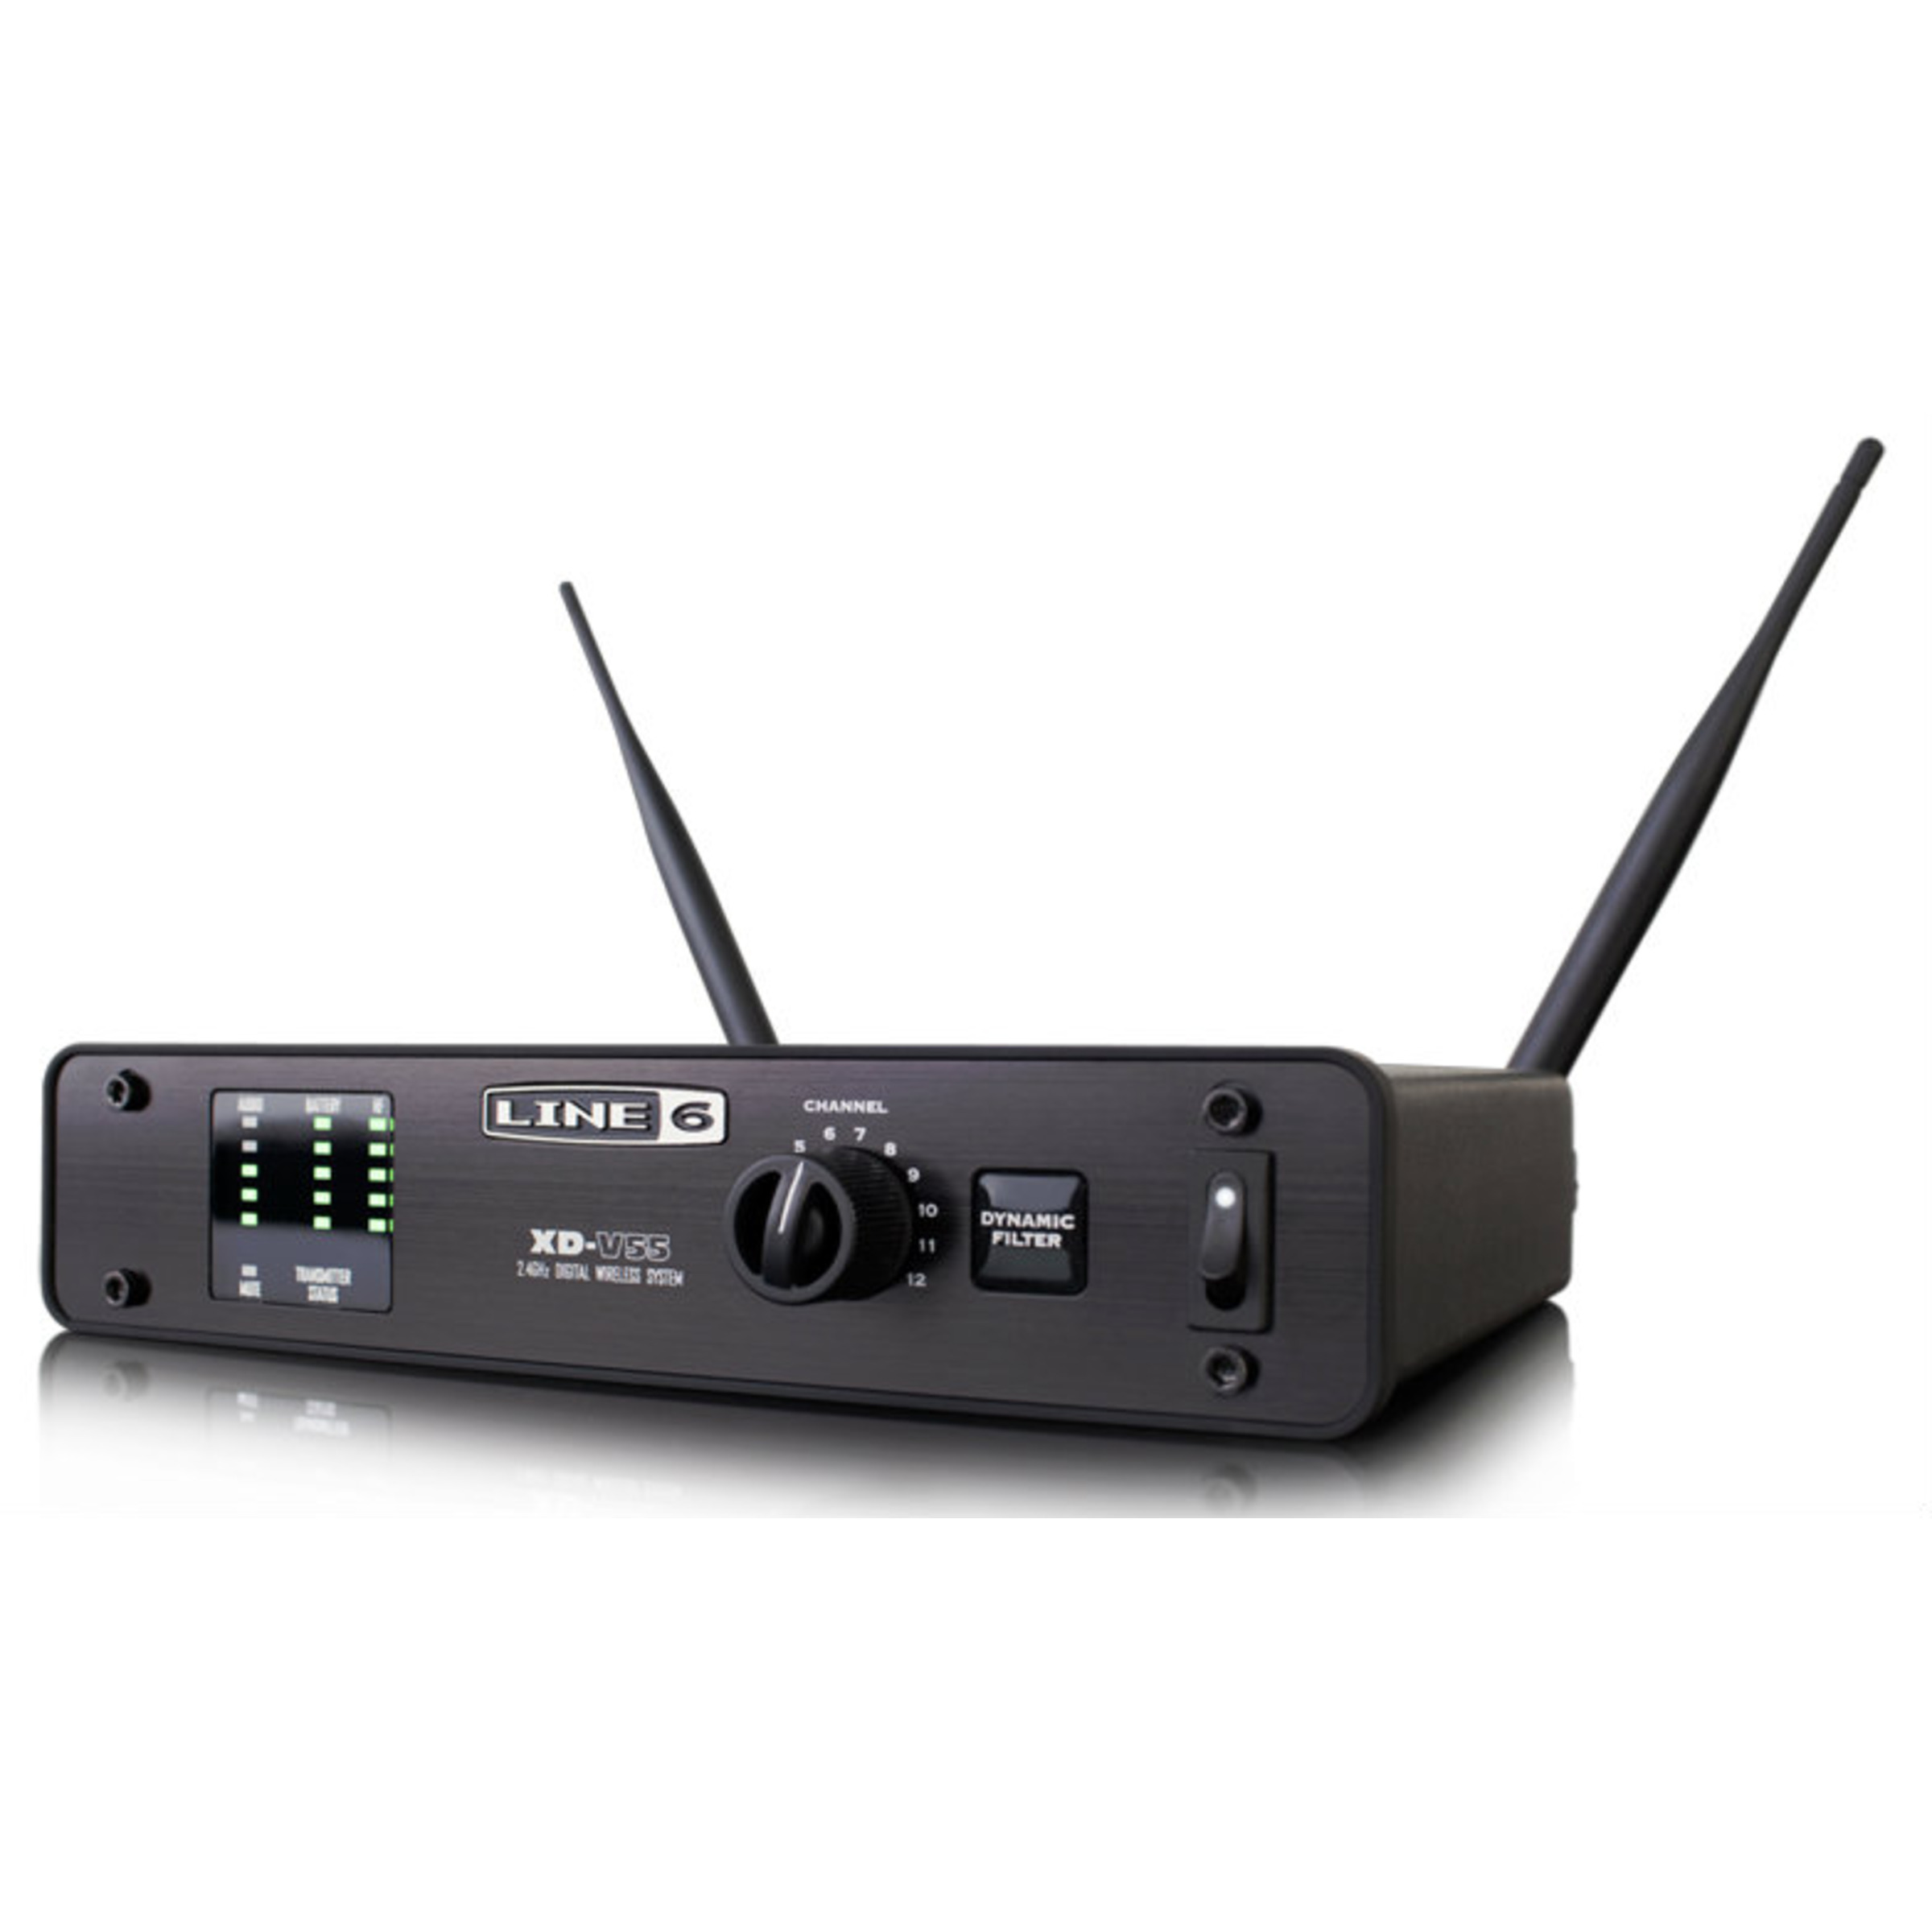 Line 6 XD-V55L Digital Wireless Lavalier System - GigGear